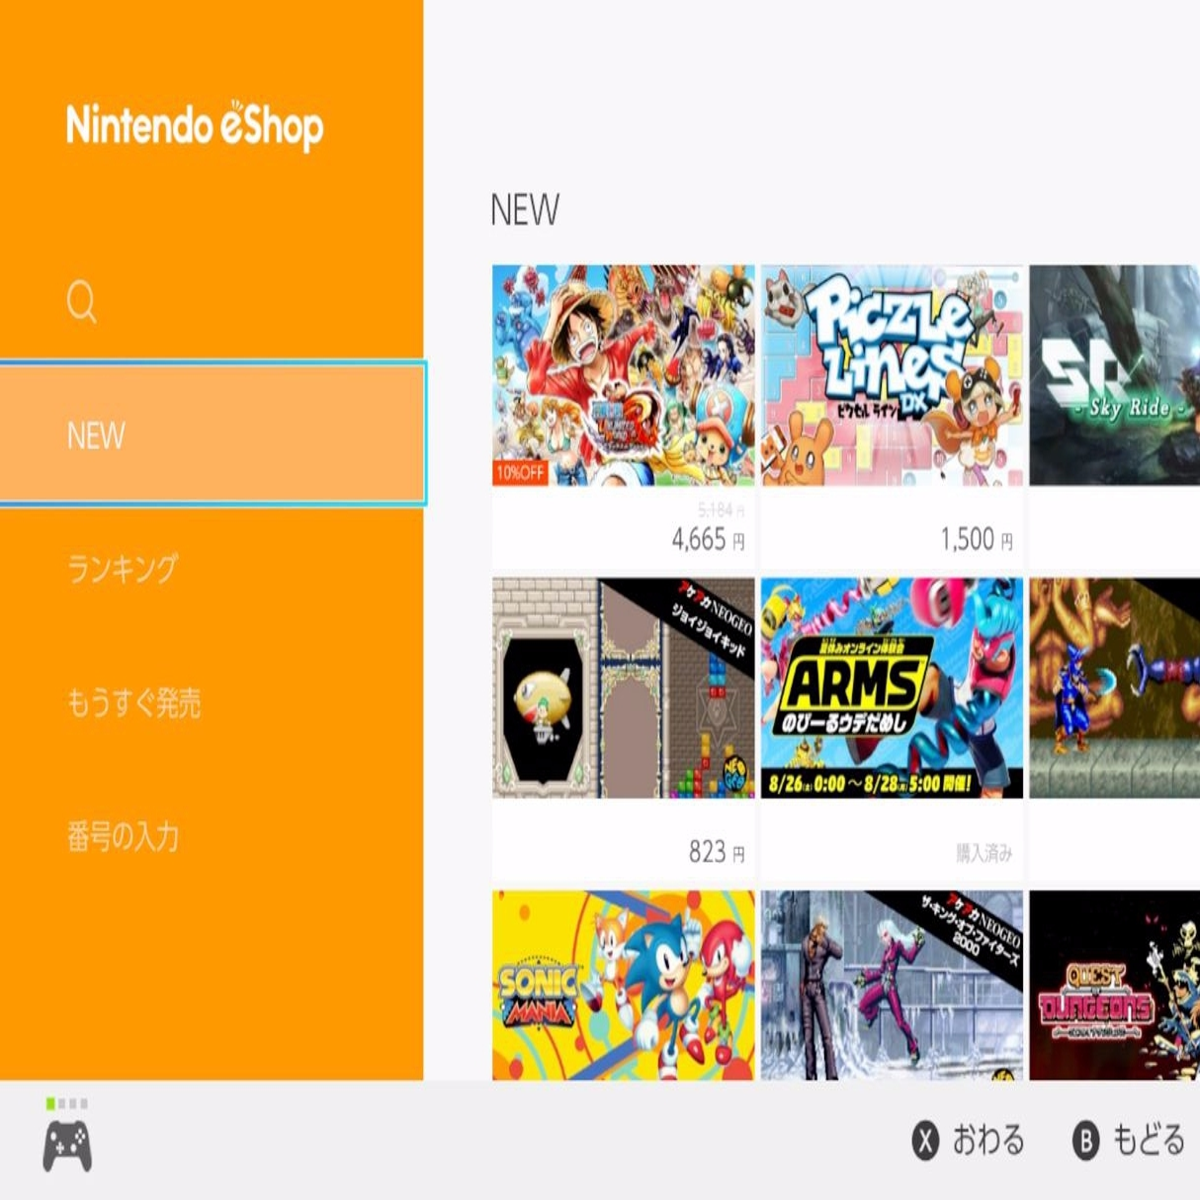 Nintendo Switch Free Games - My Nintendo Store - Nintendo Official